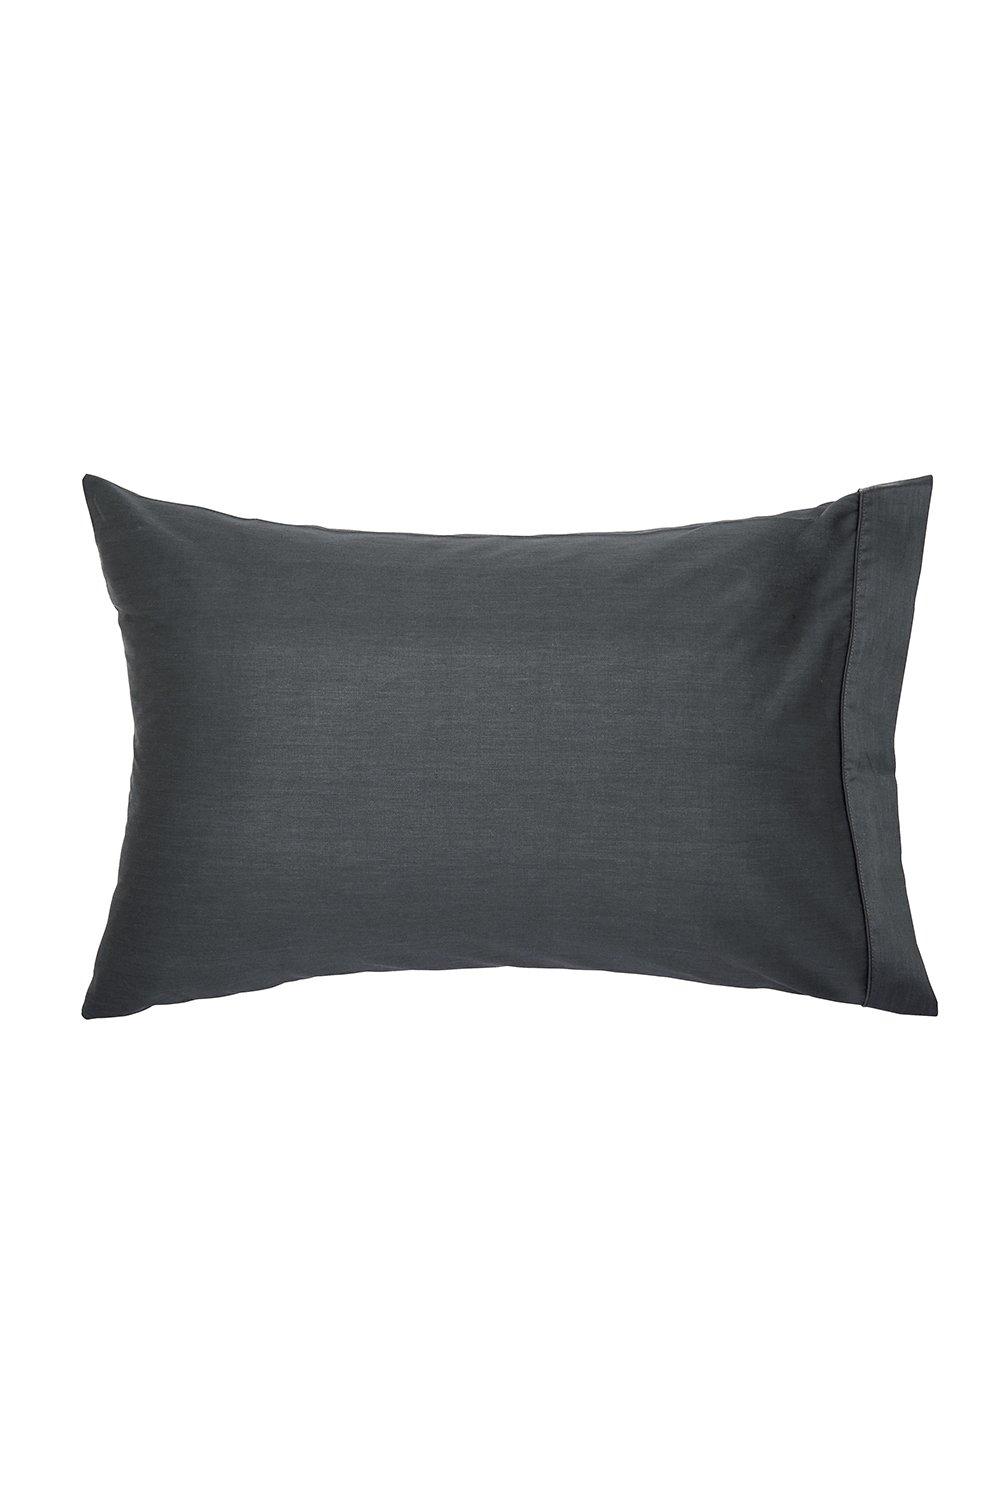 'Darnley Toile' Egytian Cotton Standard Pillowcase